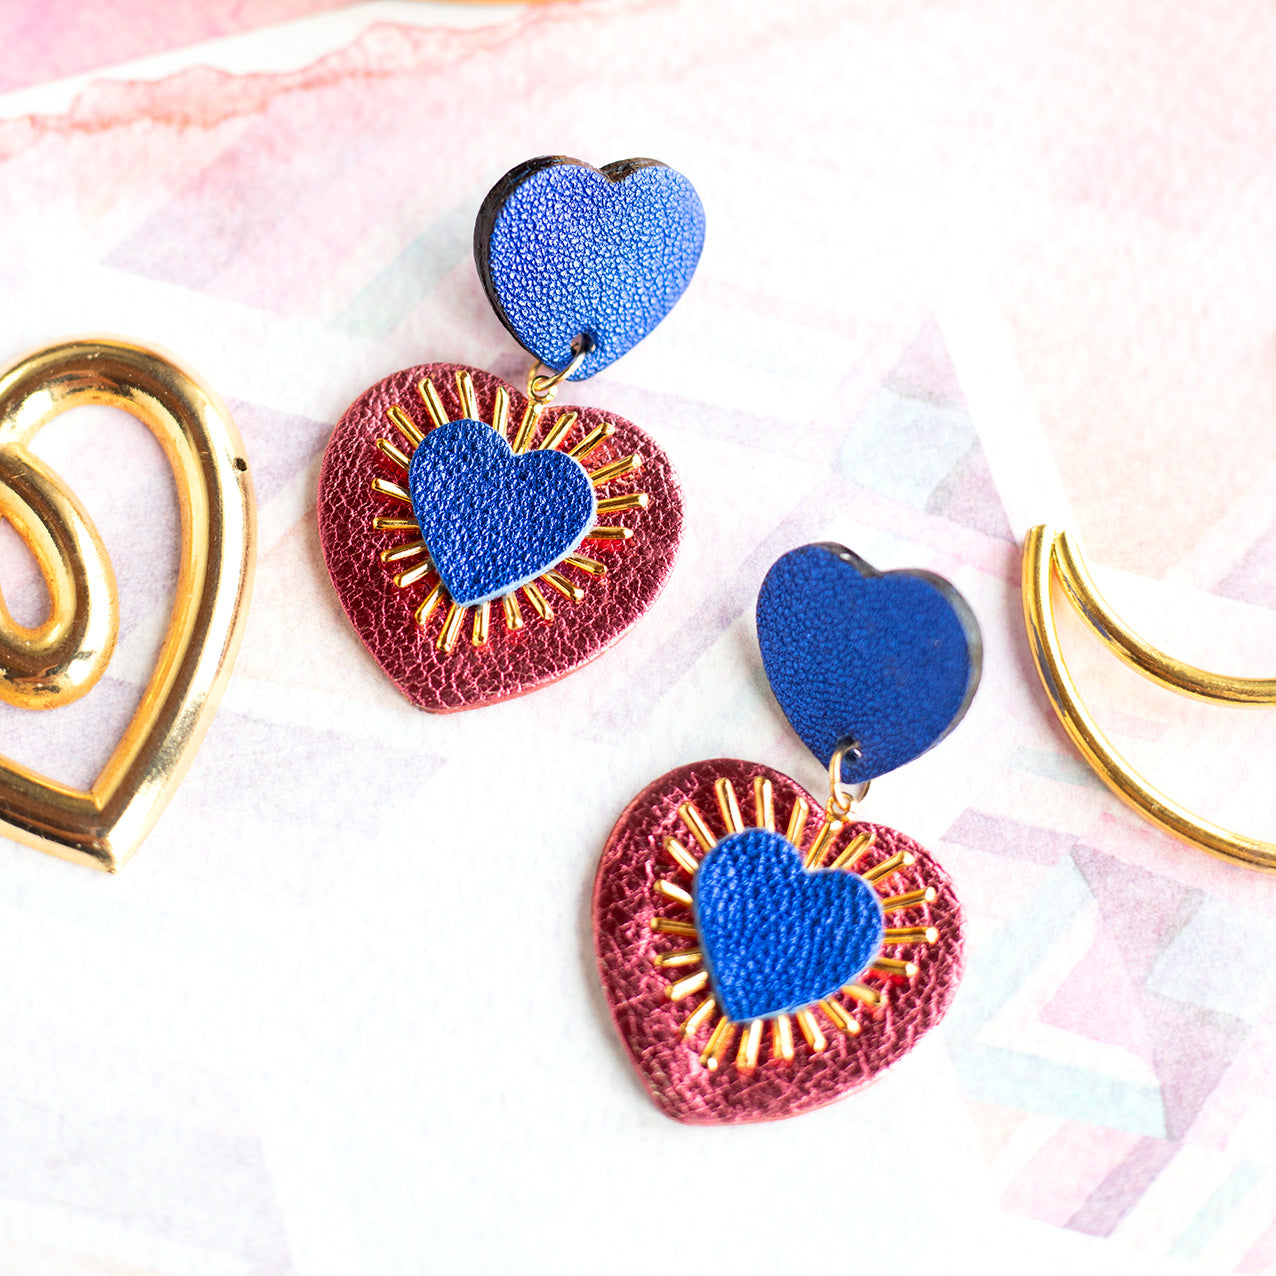 Sacré Coeur earrings in ultramarine blue and metallic raspberry pink leather